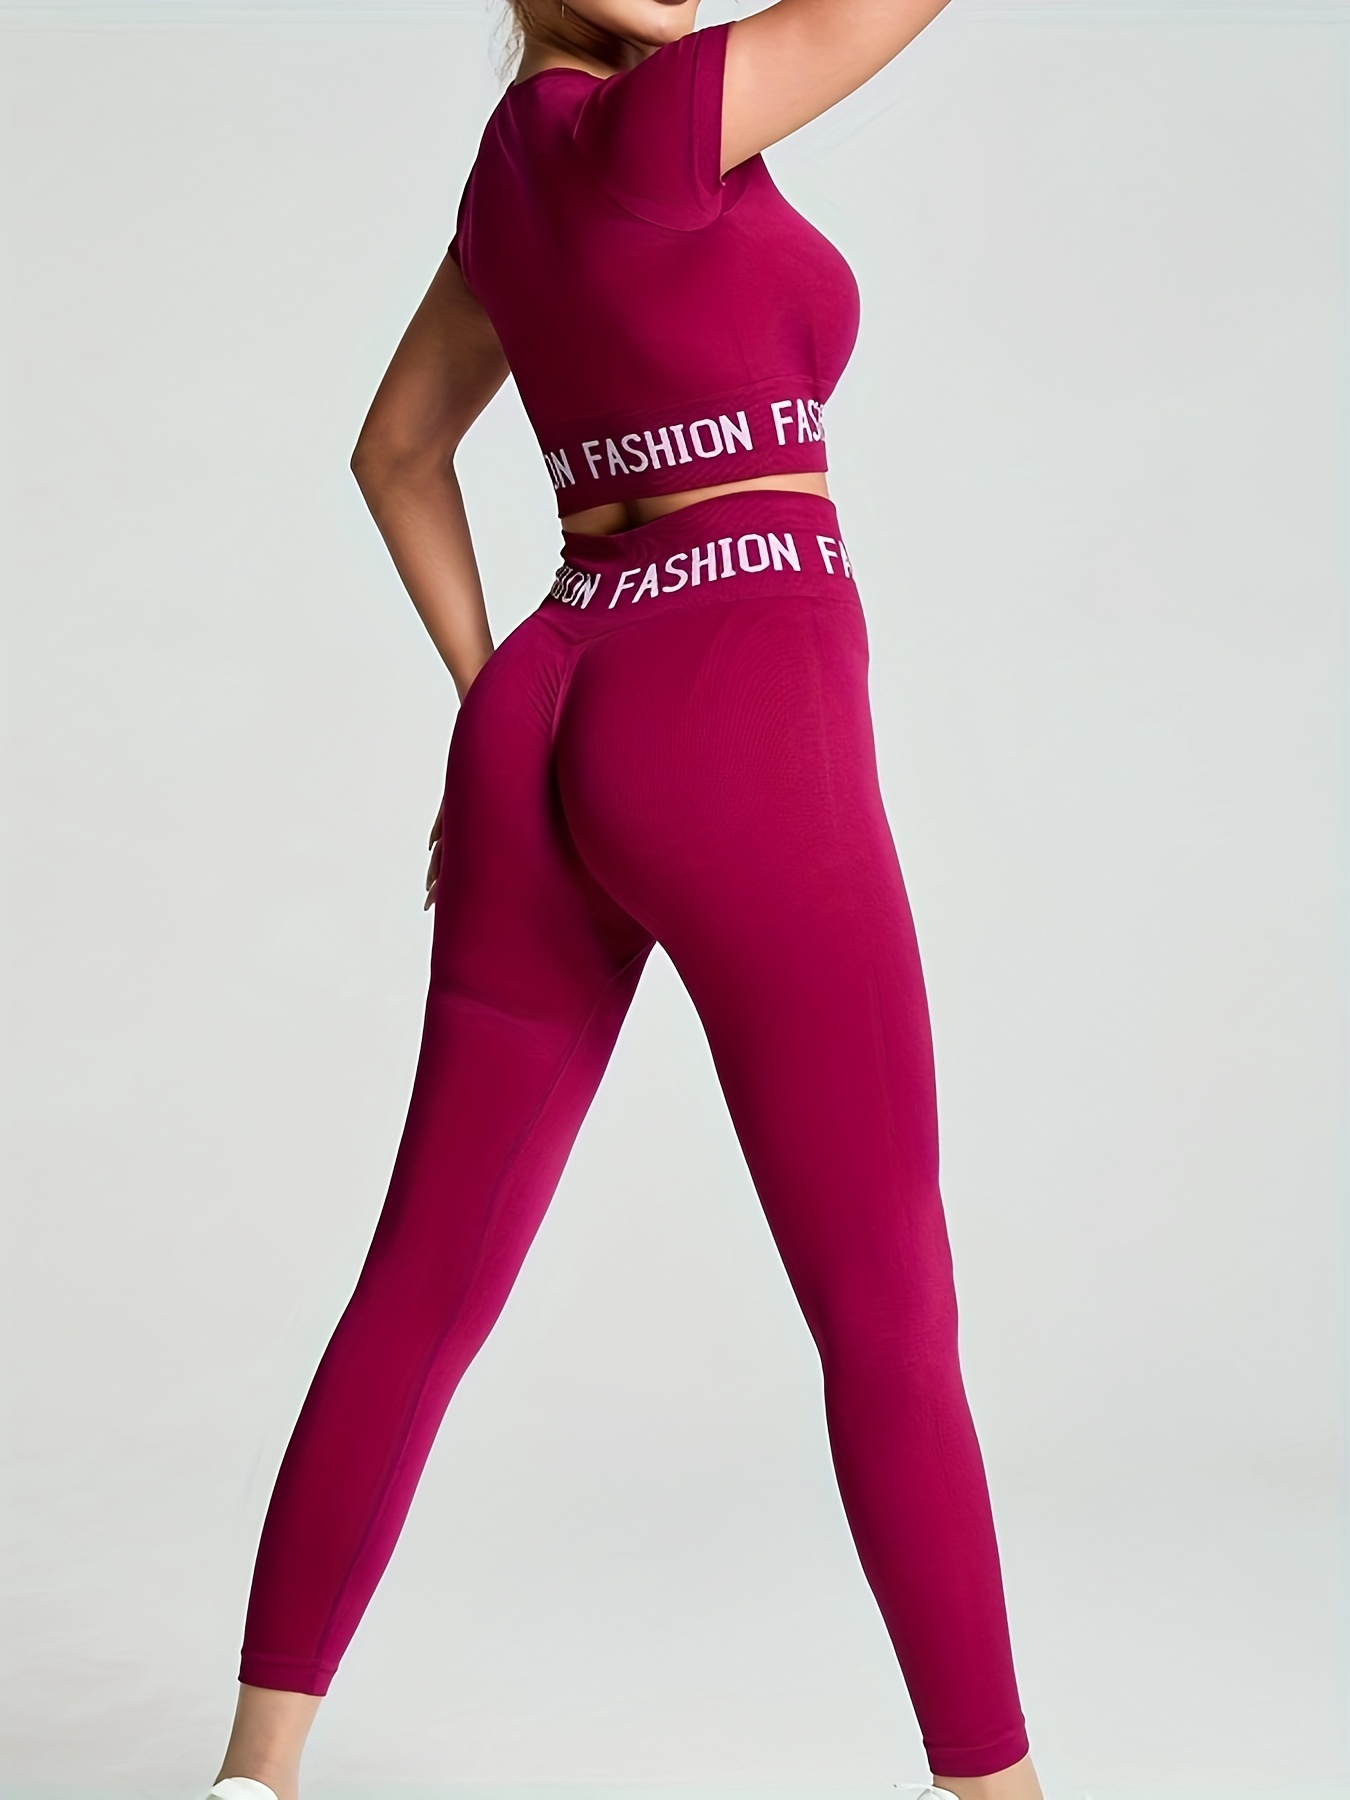 PINK VICTORIA'S SECRET SPORT LEGGINGs, Women's Fashion, Activewear